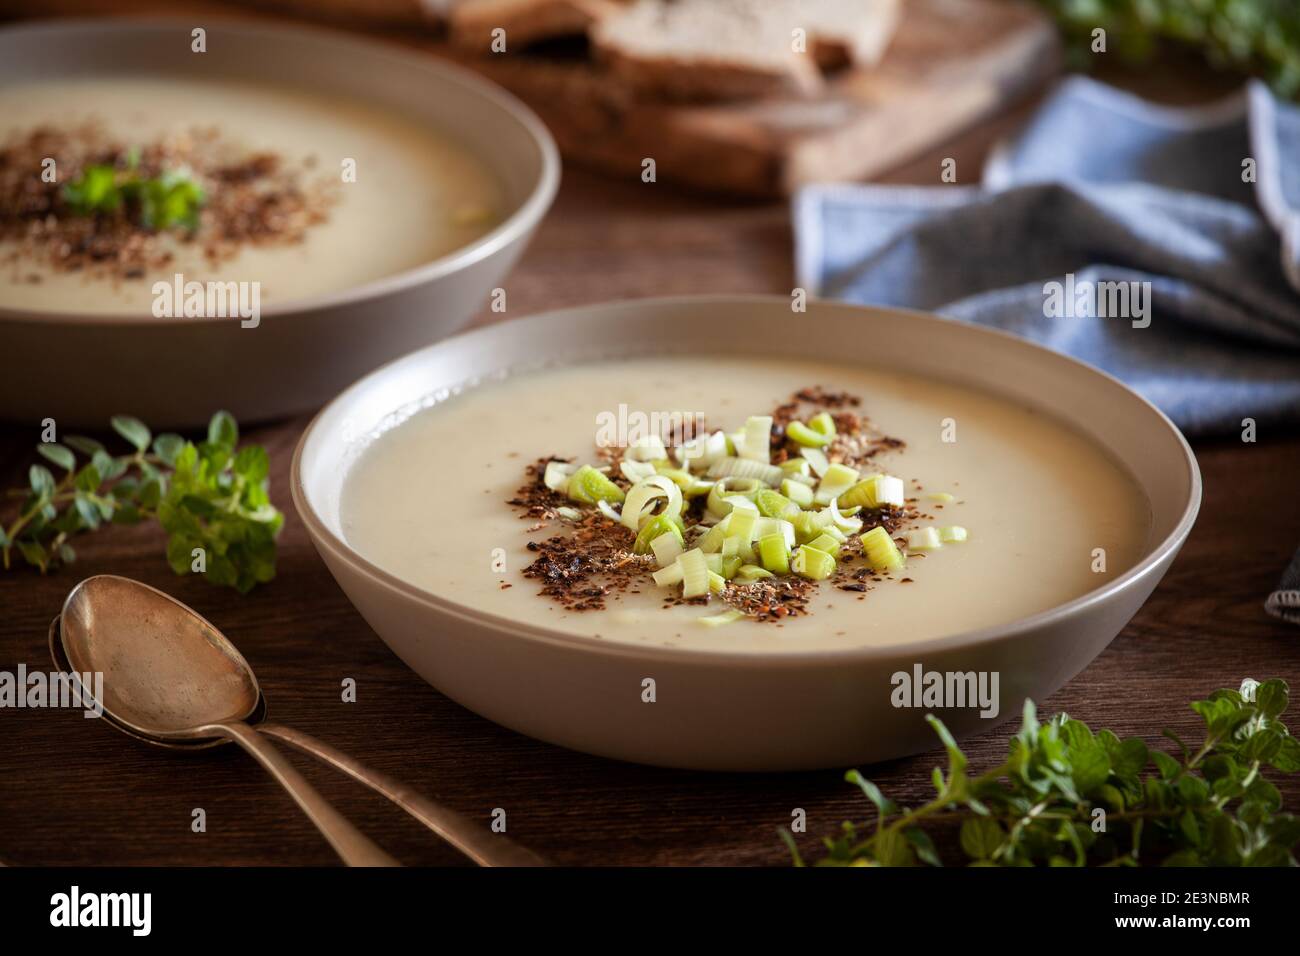 Bowls of homemade leek and potato soup Stock Photo